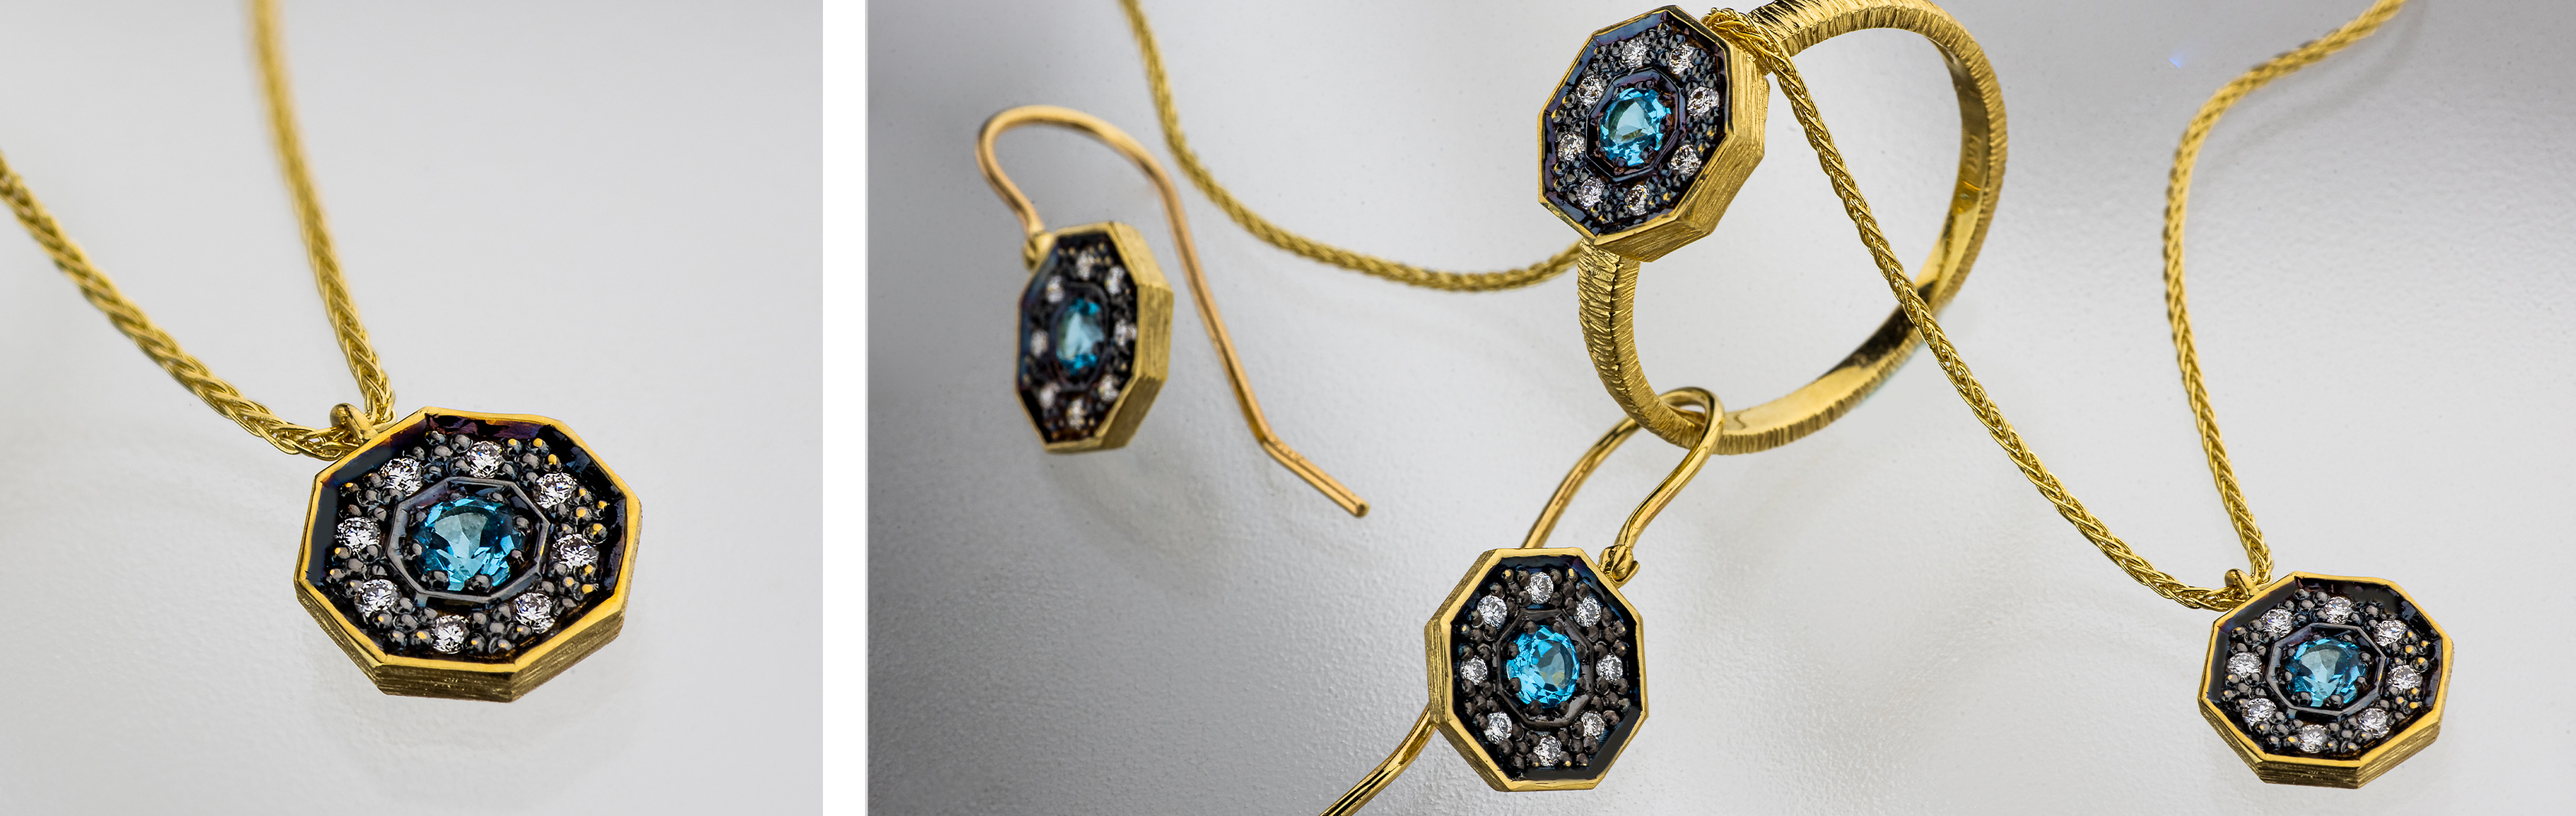 14K gold jewelry set with Blue Topaz and Diamonds